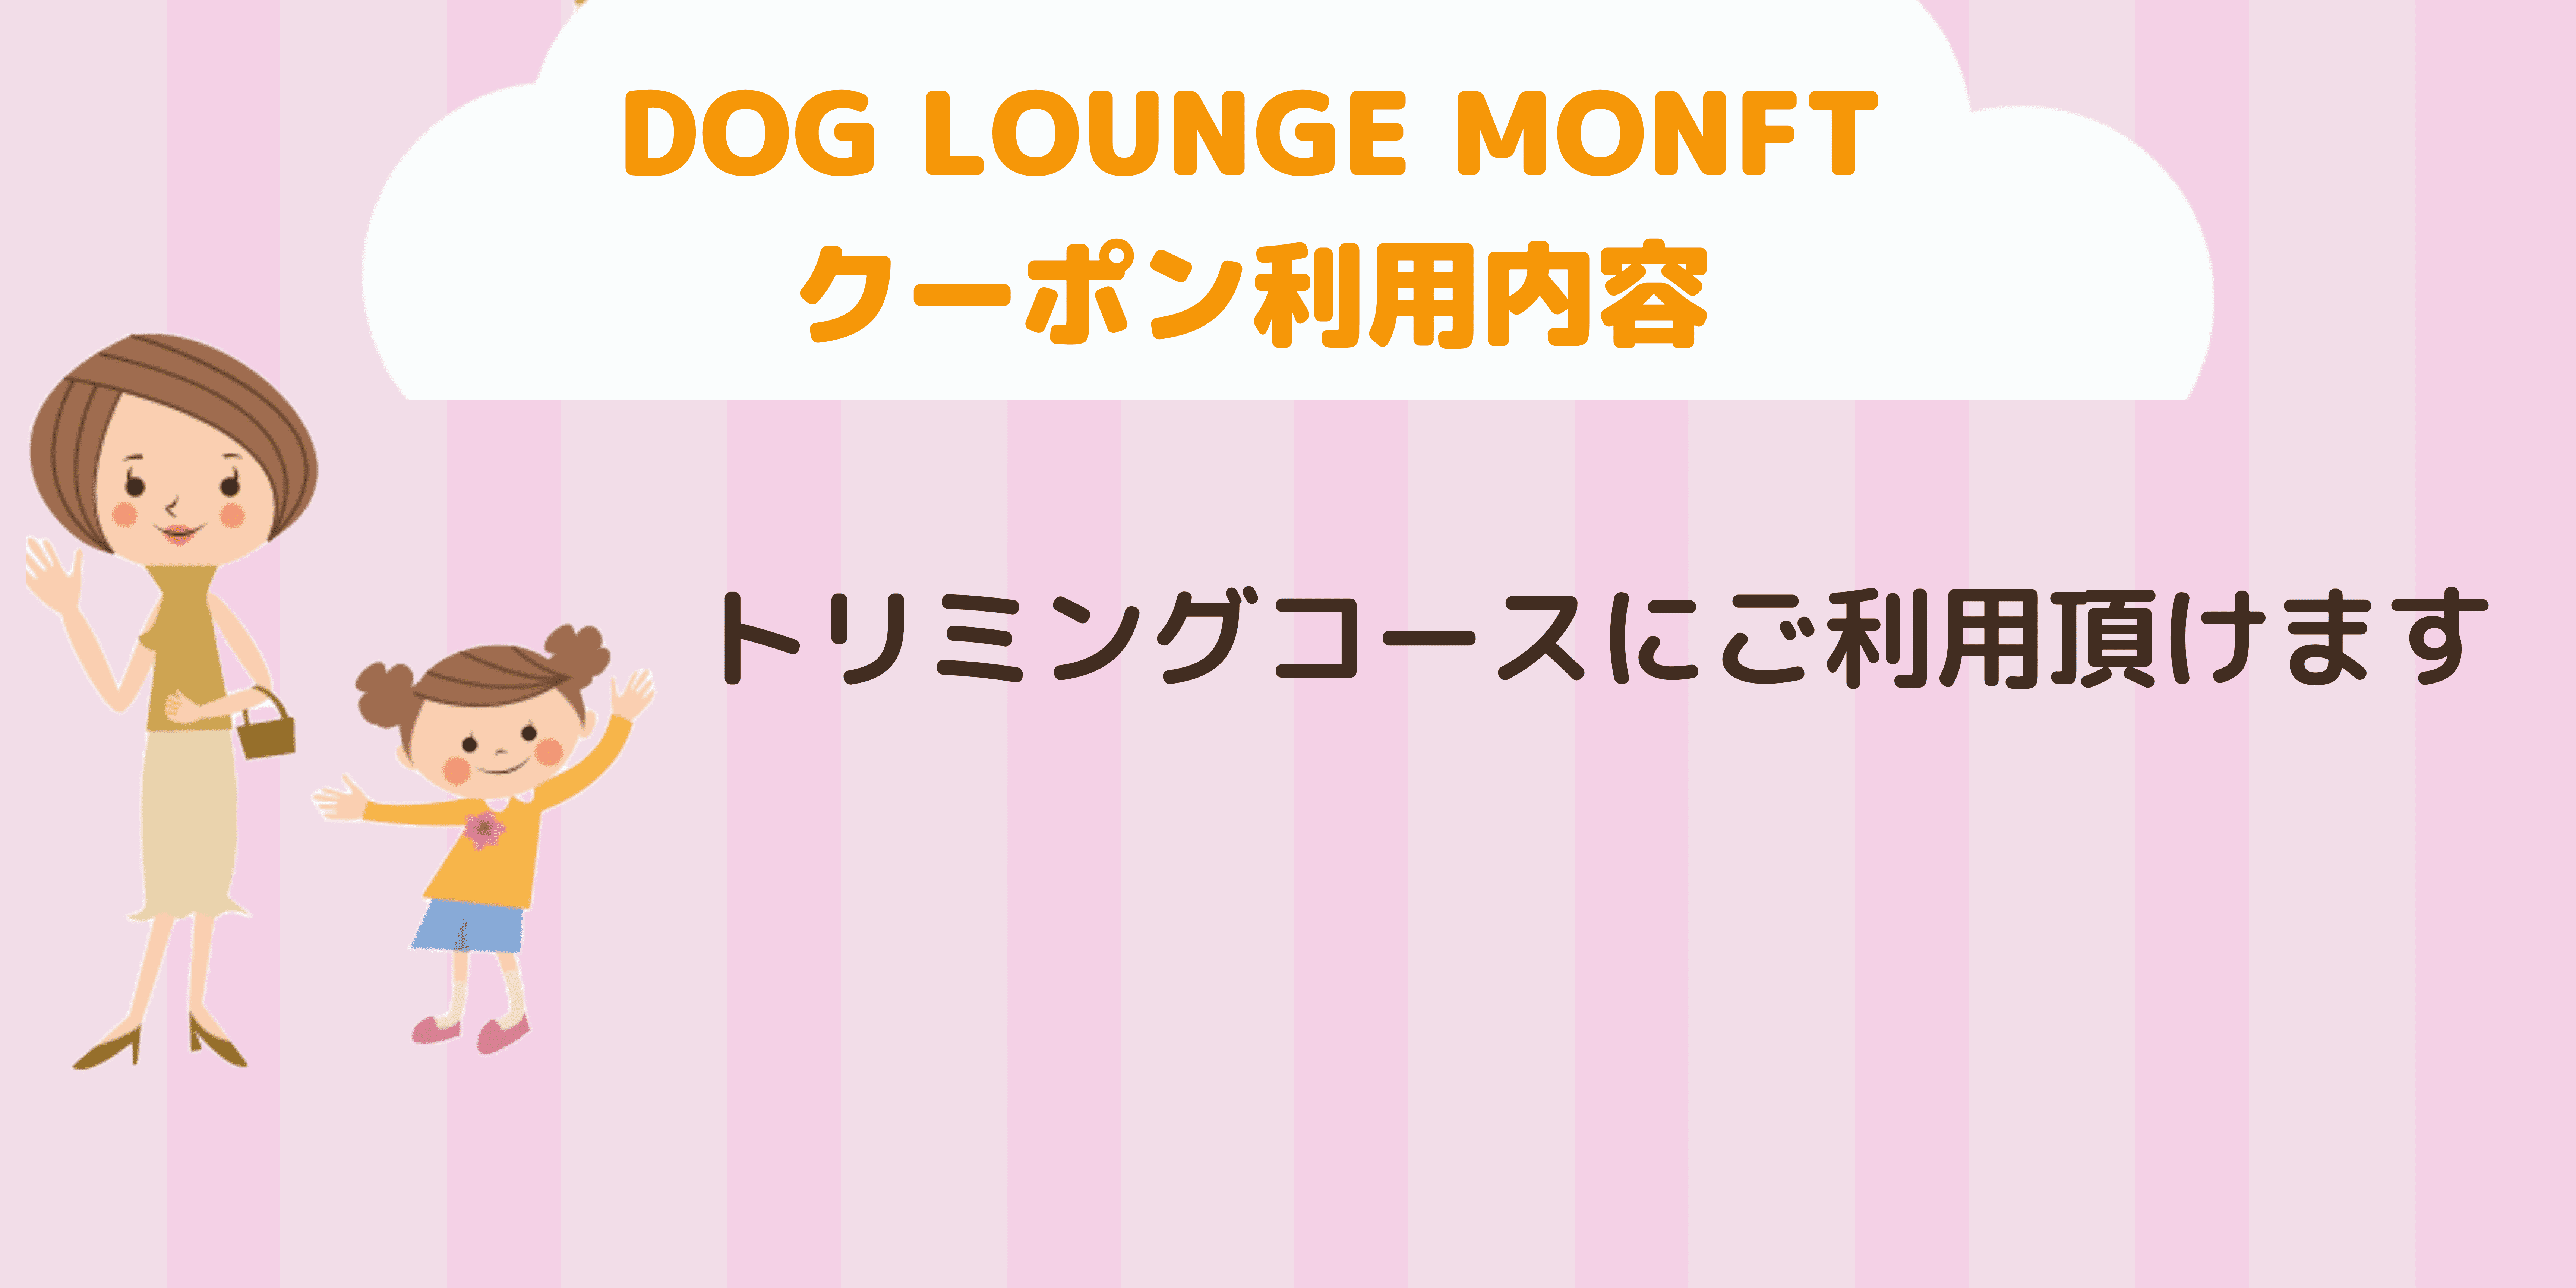 DOG LOUNGE MONFT